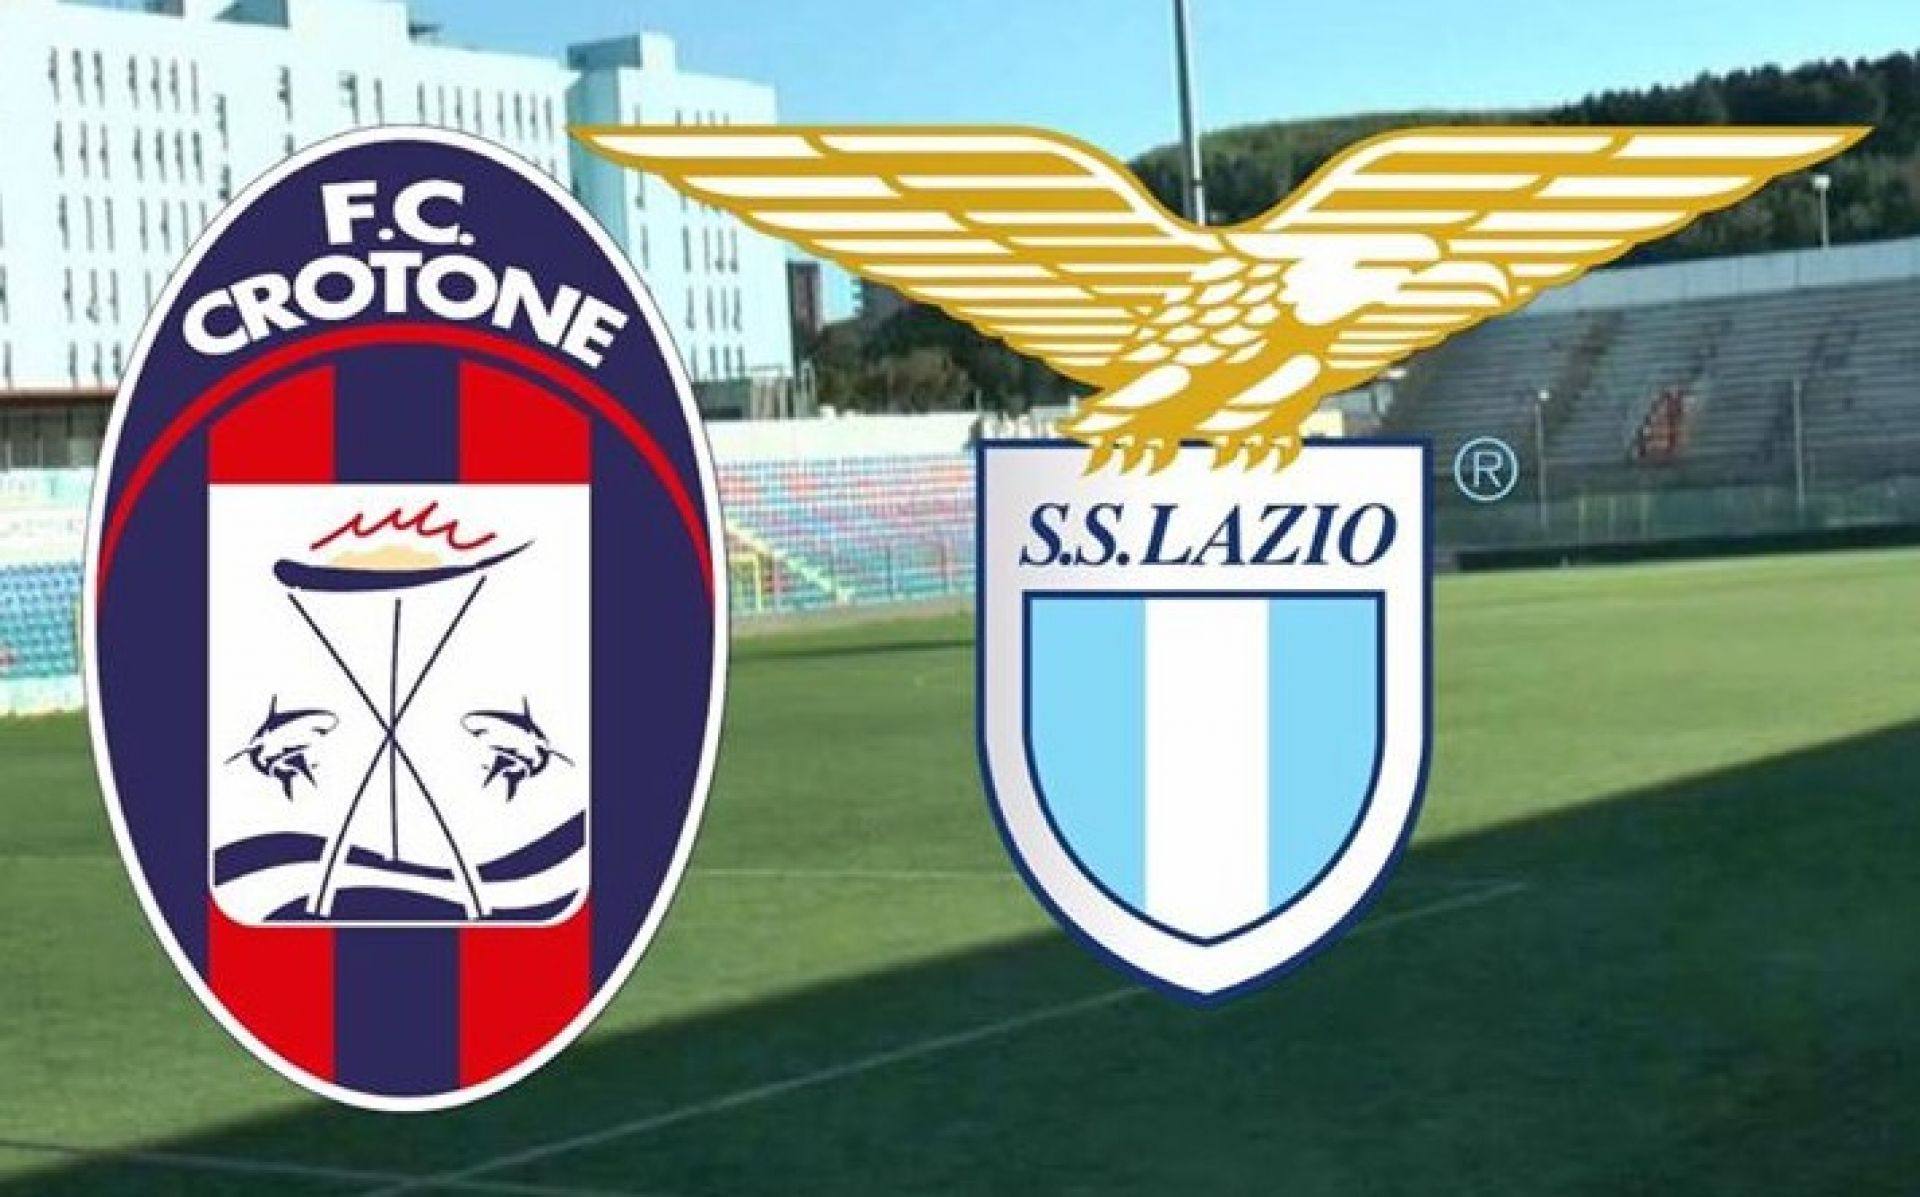 Crotone Lazio Maçı İddaa Tahmini ve Yorumu 28 Mayıs 2017 